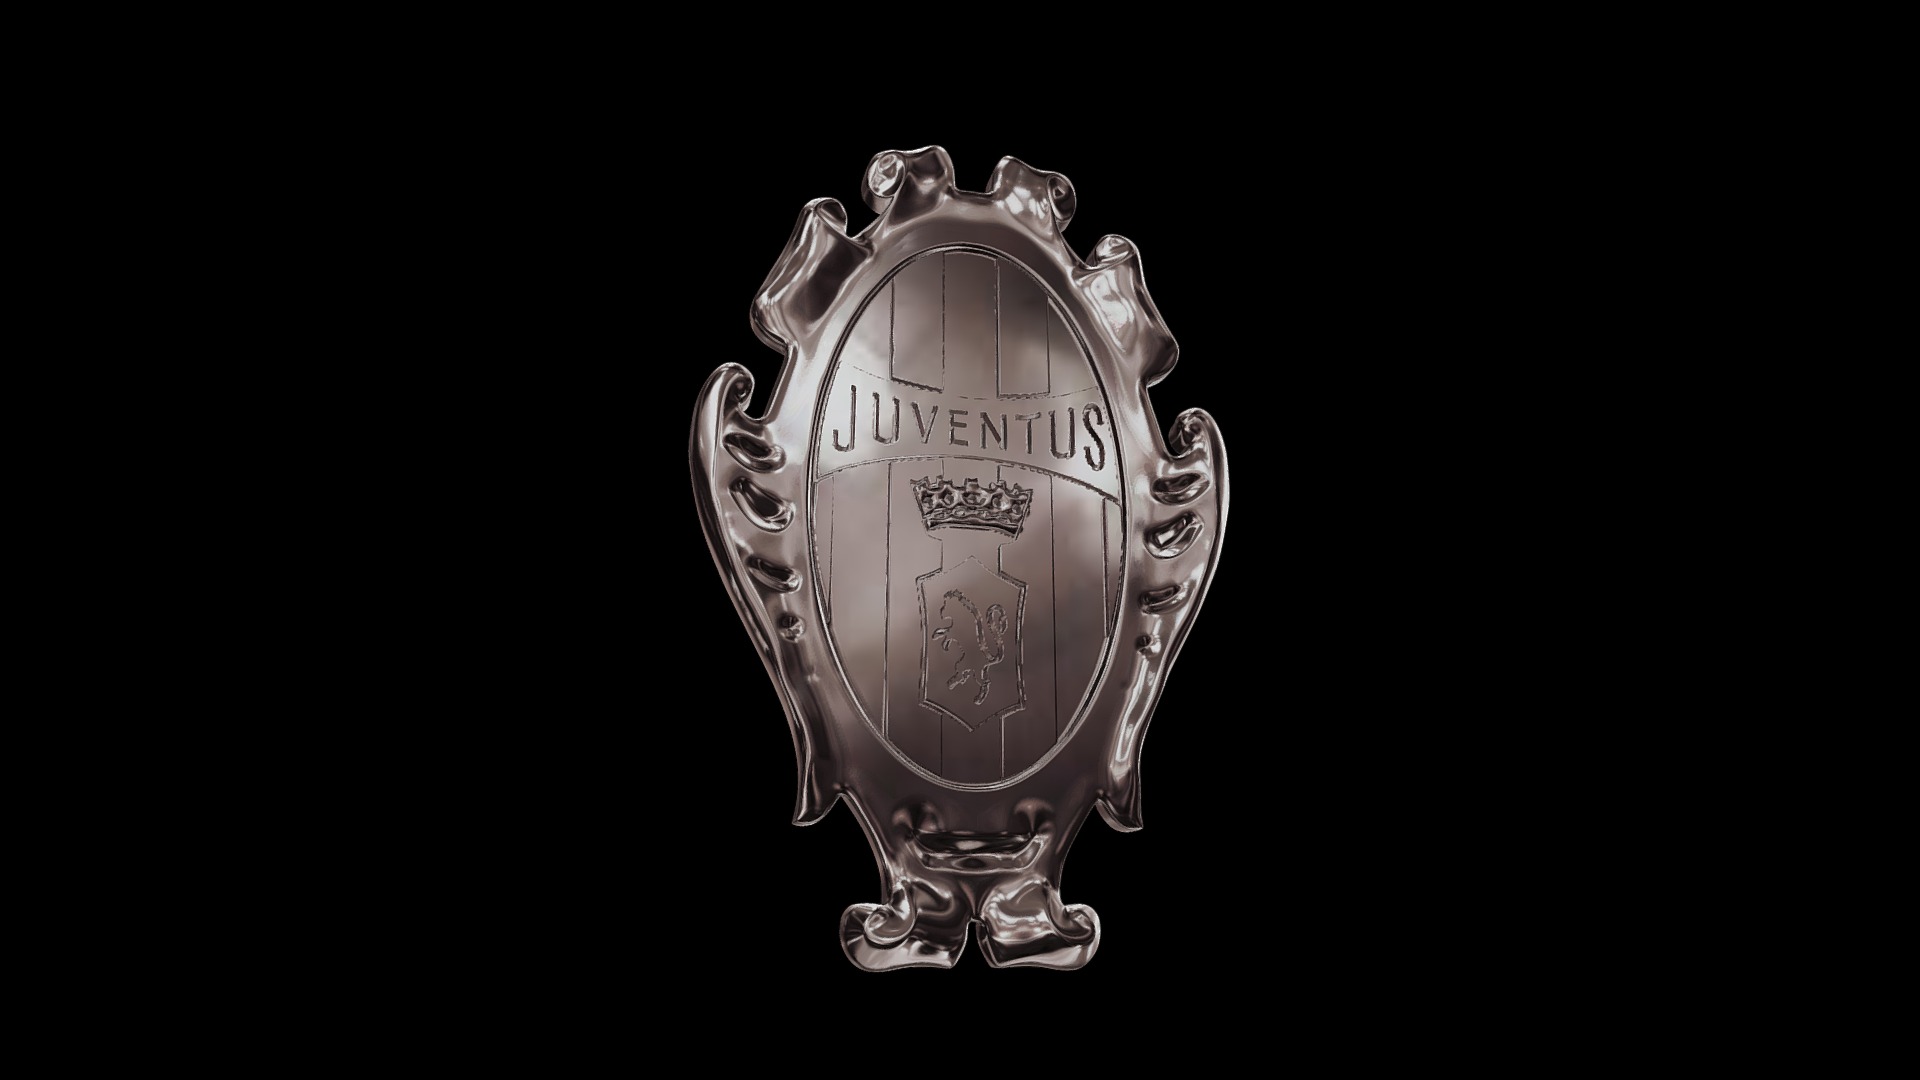 3D model Juventus vintage silver pendant - This is a 3D model of the Juventus vintage silver pendant. The 3D model is about a gold and silver trophy.